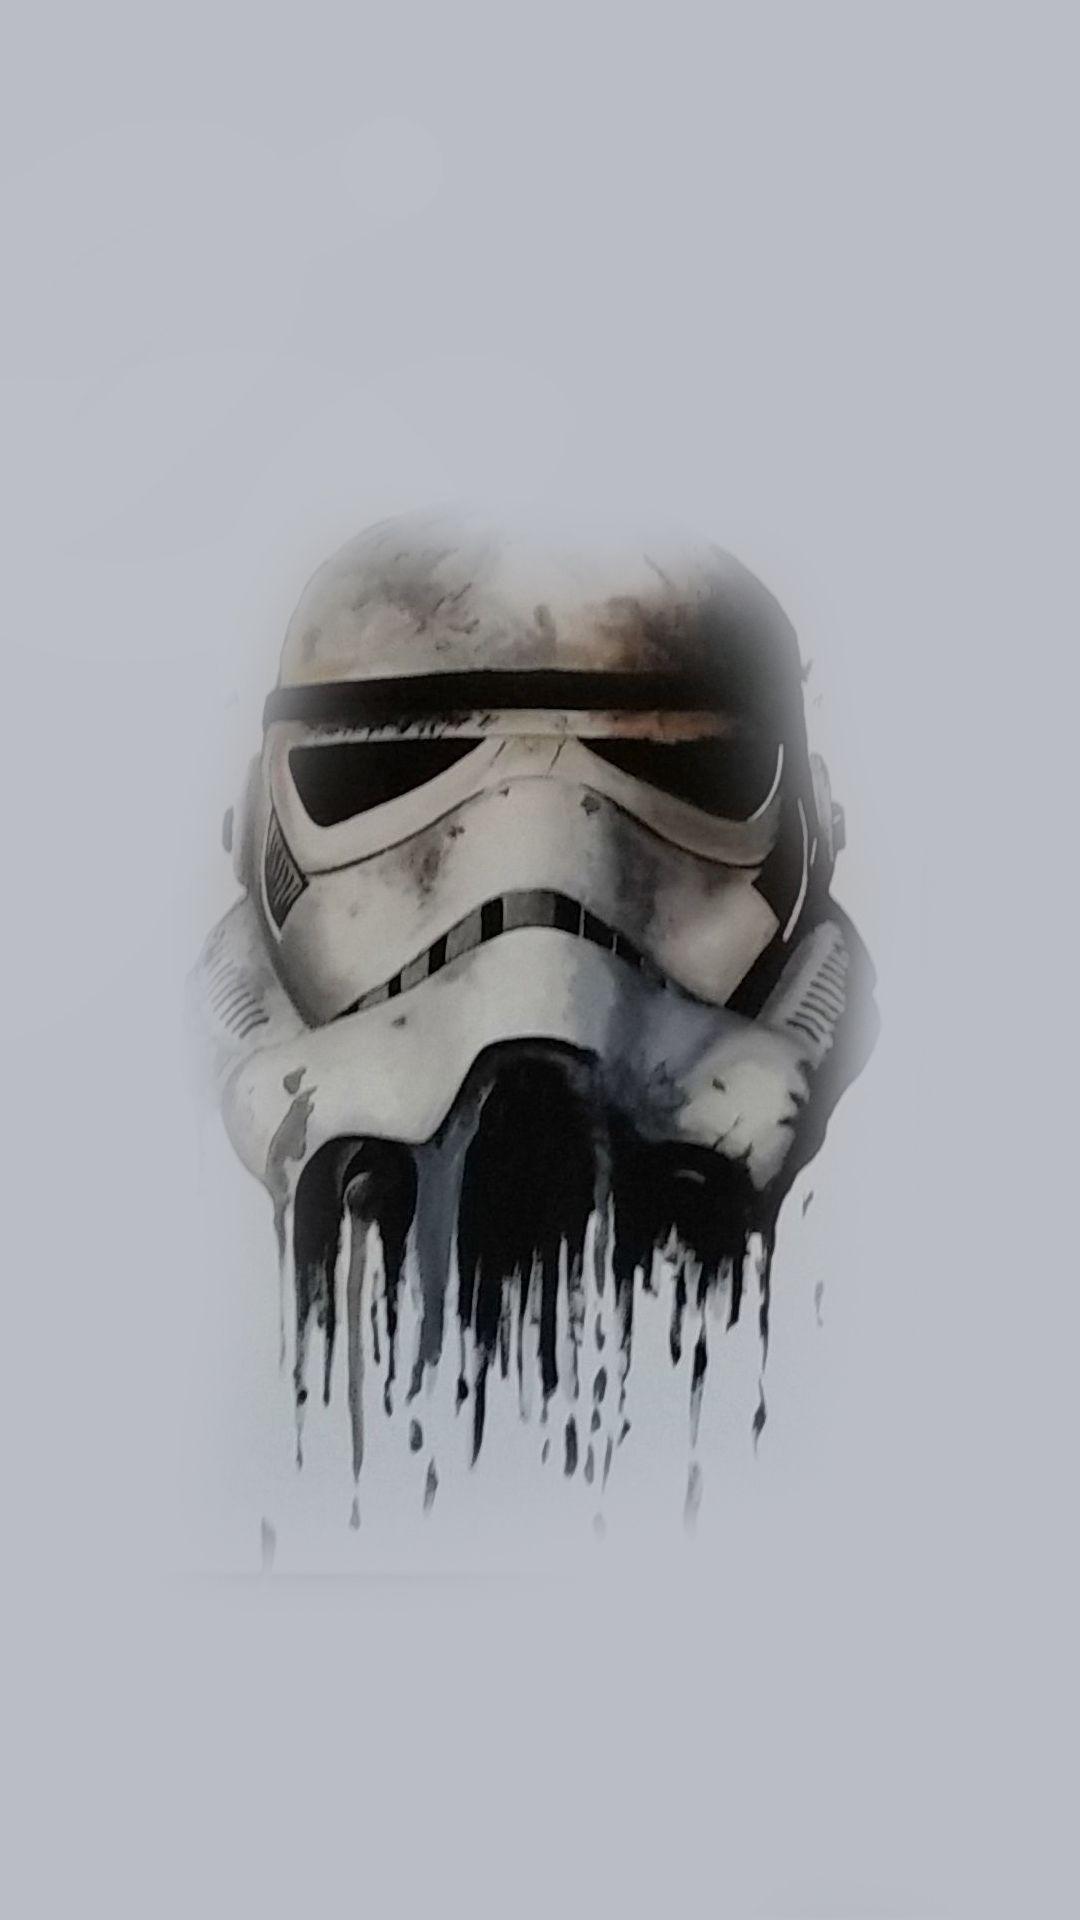 Star Wars Trooper Helmet Wallpapers Wallpaper Cave